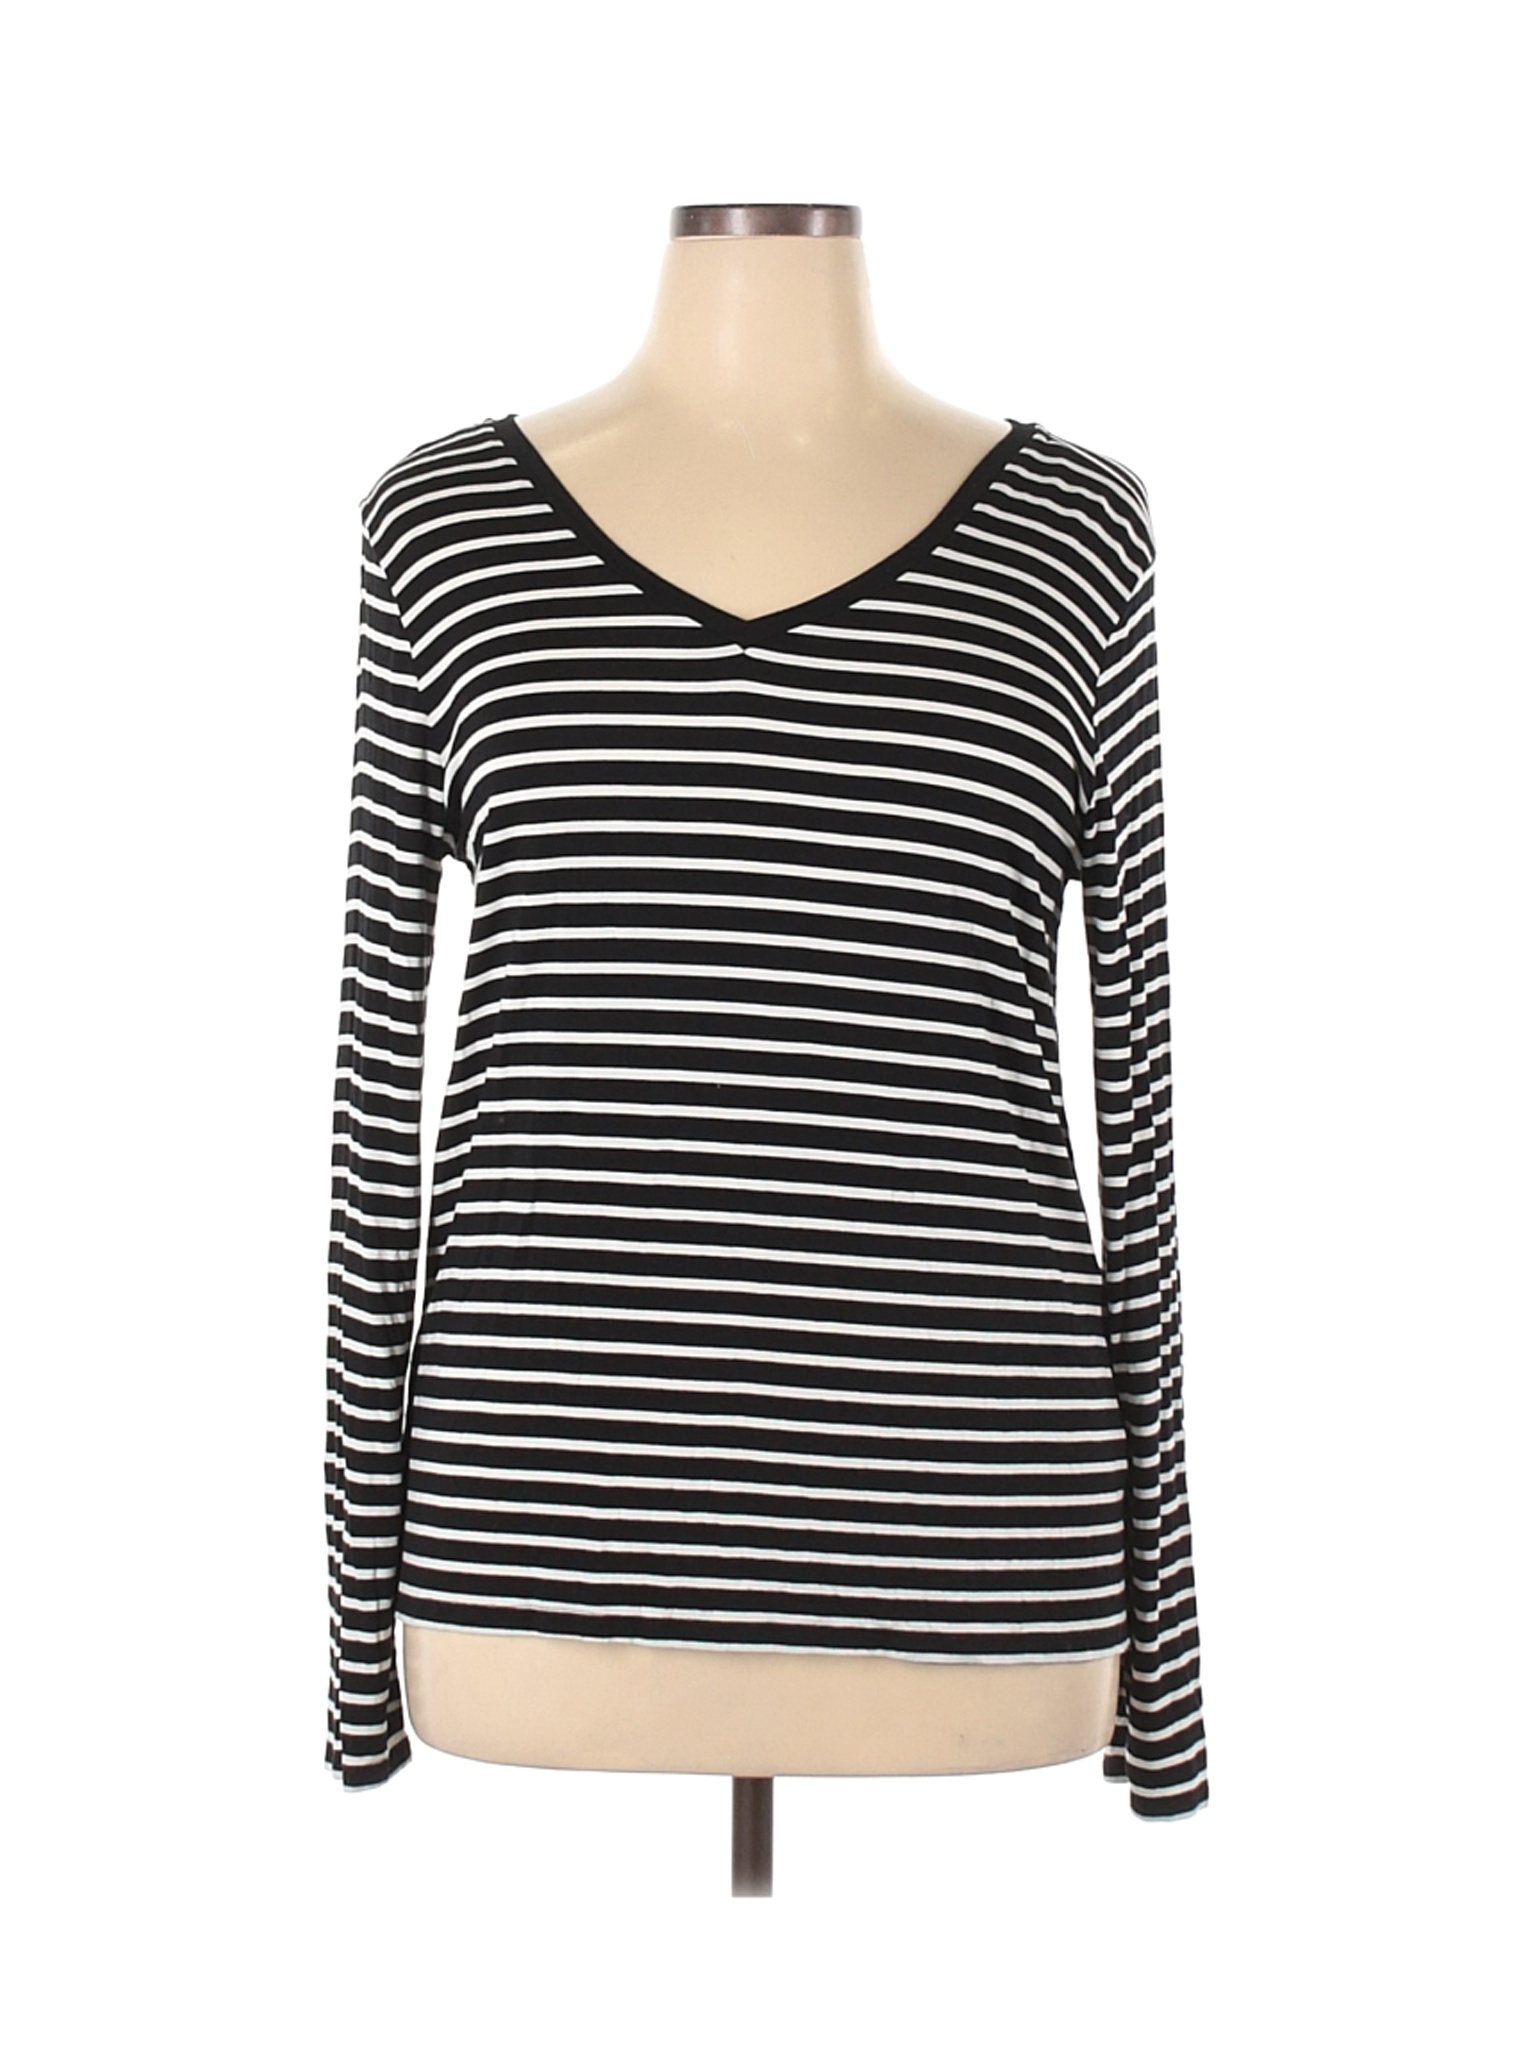 Cupio Women Black Long Sleeve T-Shirt XL | eBay